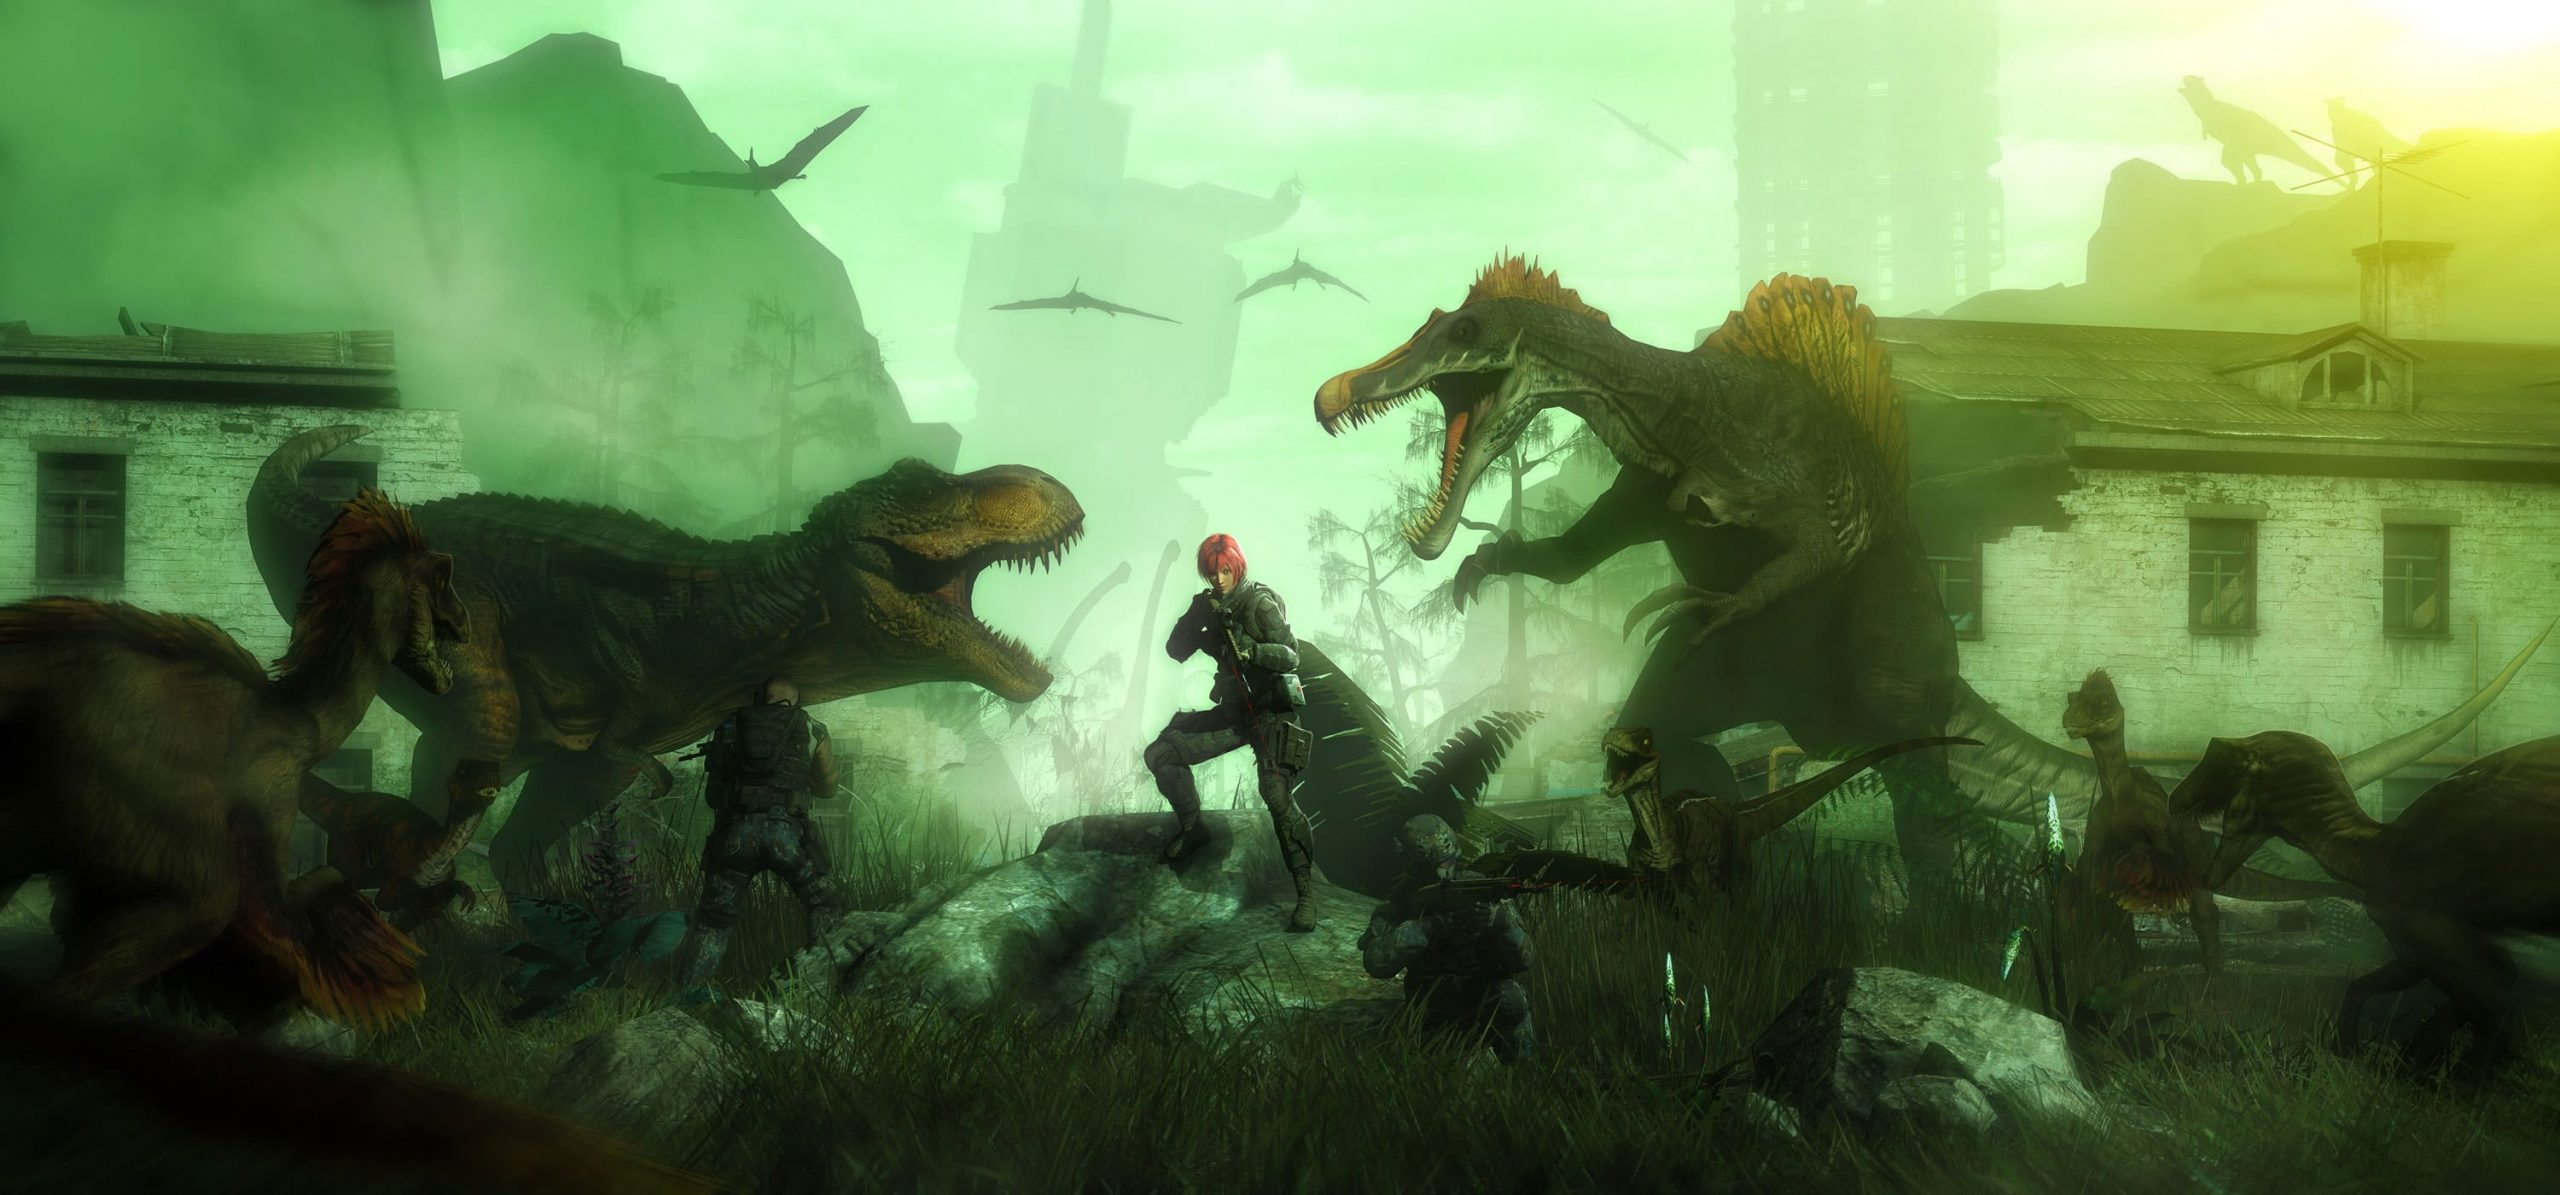 Wallpaper Two Dinosaurs Game Application Screenshot, Weapon